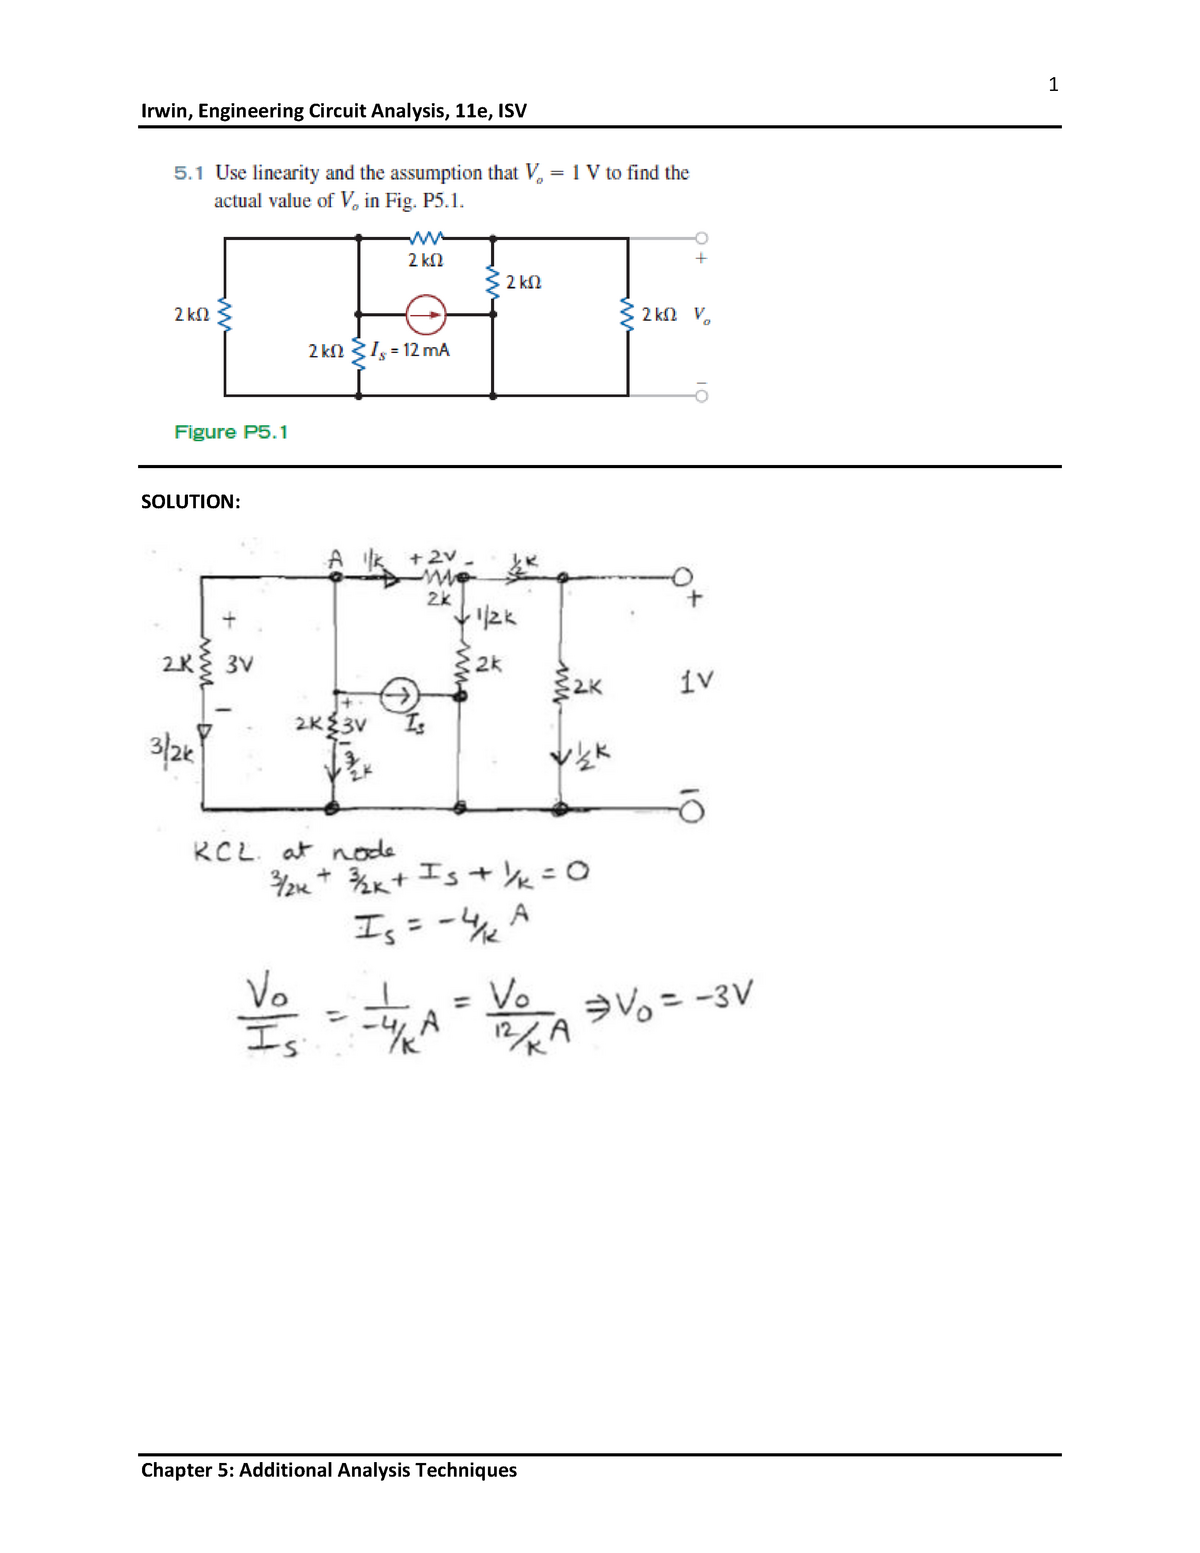 Ch05 - 회로이론ii (Circuit Theory ii) - 국민대학교 Irwin Engineering Circuit